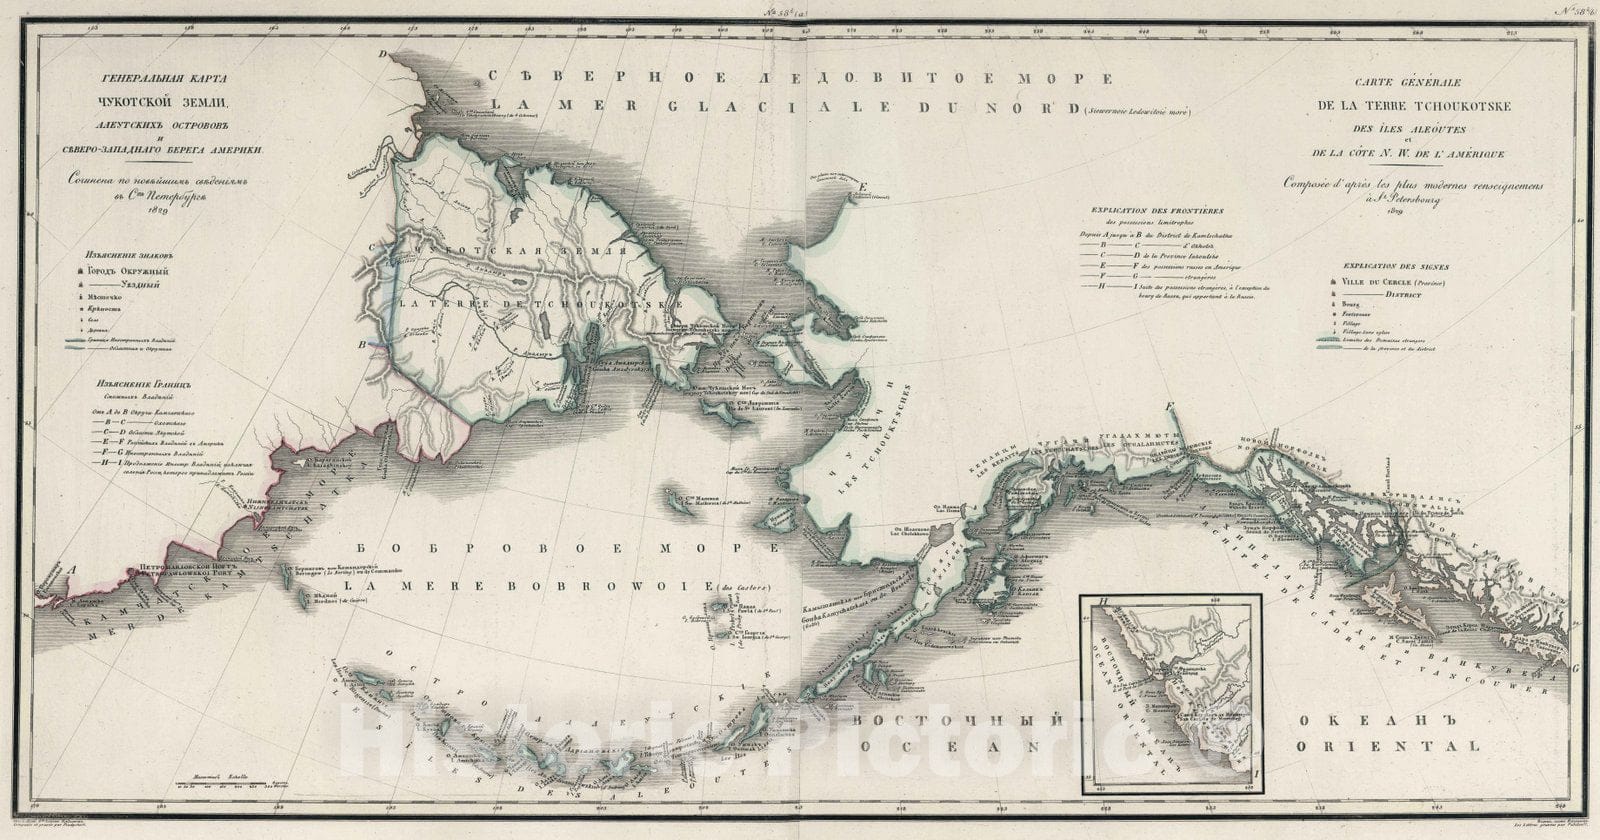 Historic Wall Map : Russia, Alaska, North Pacific Ocean 1829 Chukotskoi Zemli, Aleutskikh ostrovov i severo-zapadnago berega Ameriki , Vintage Wall Art